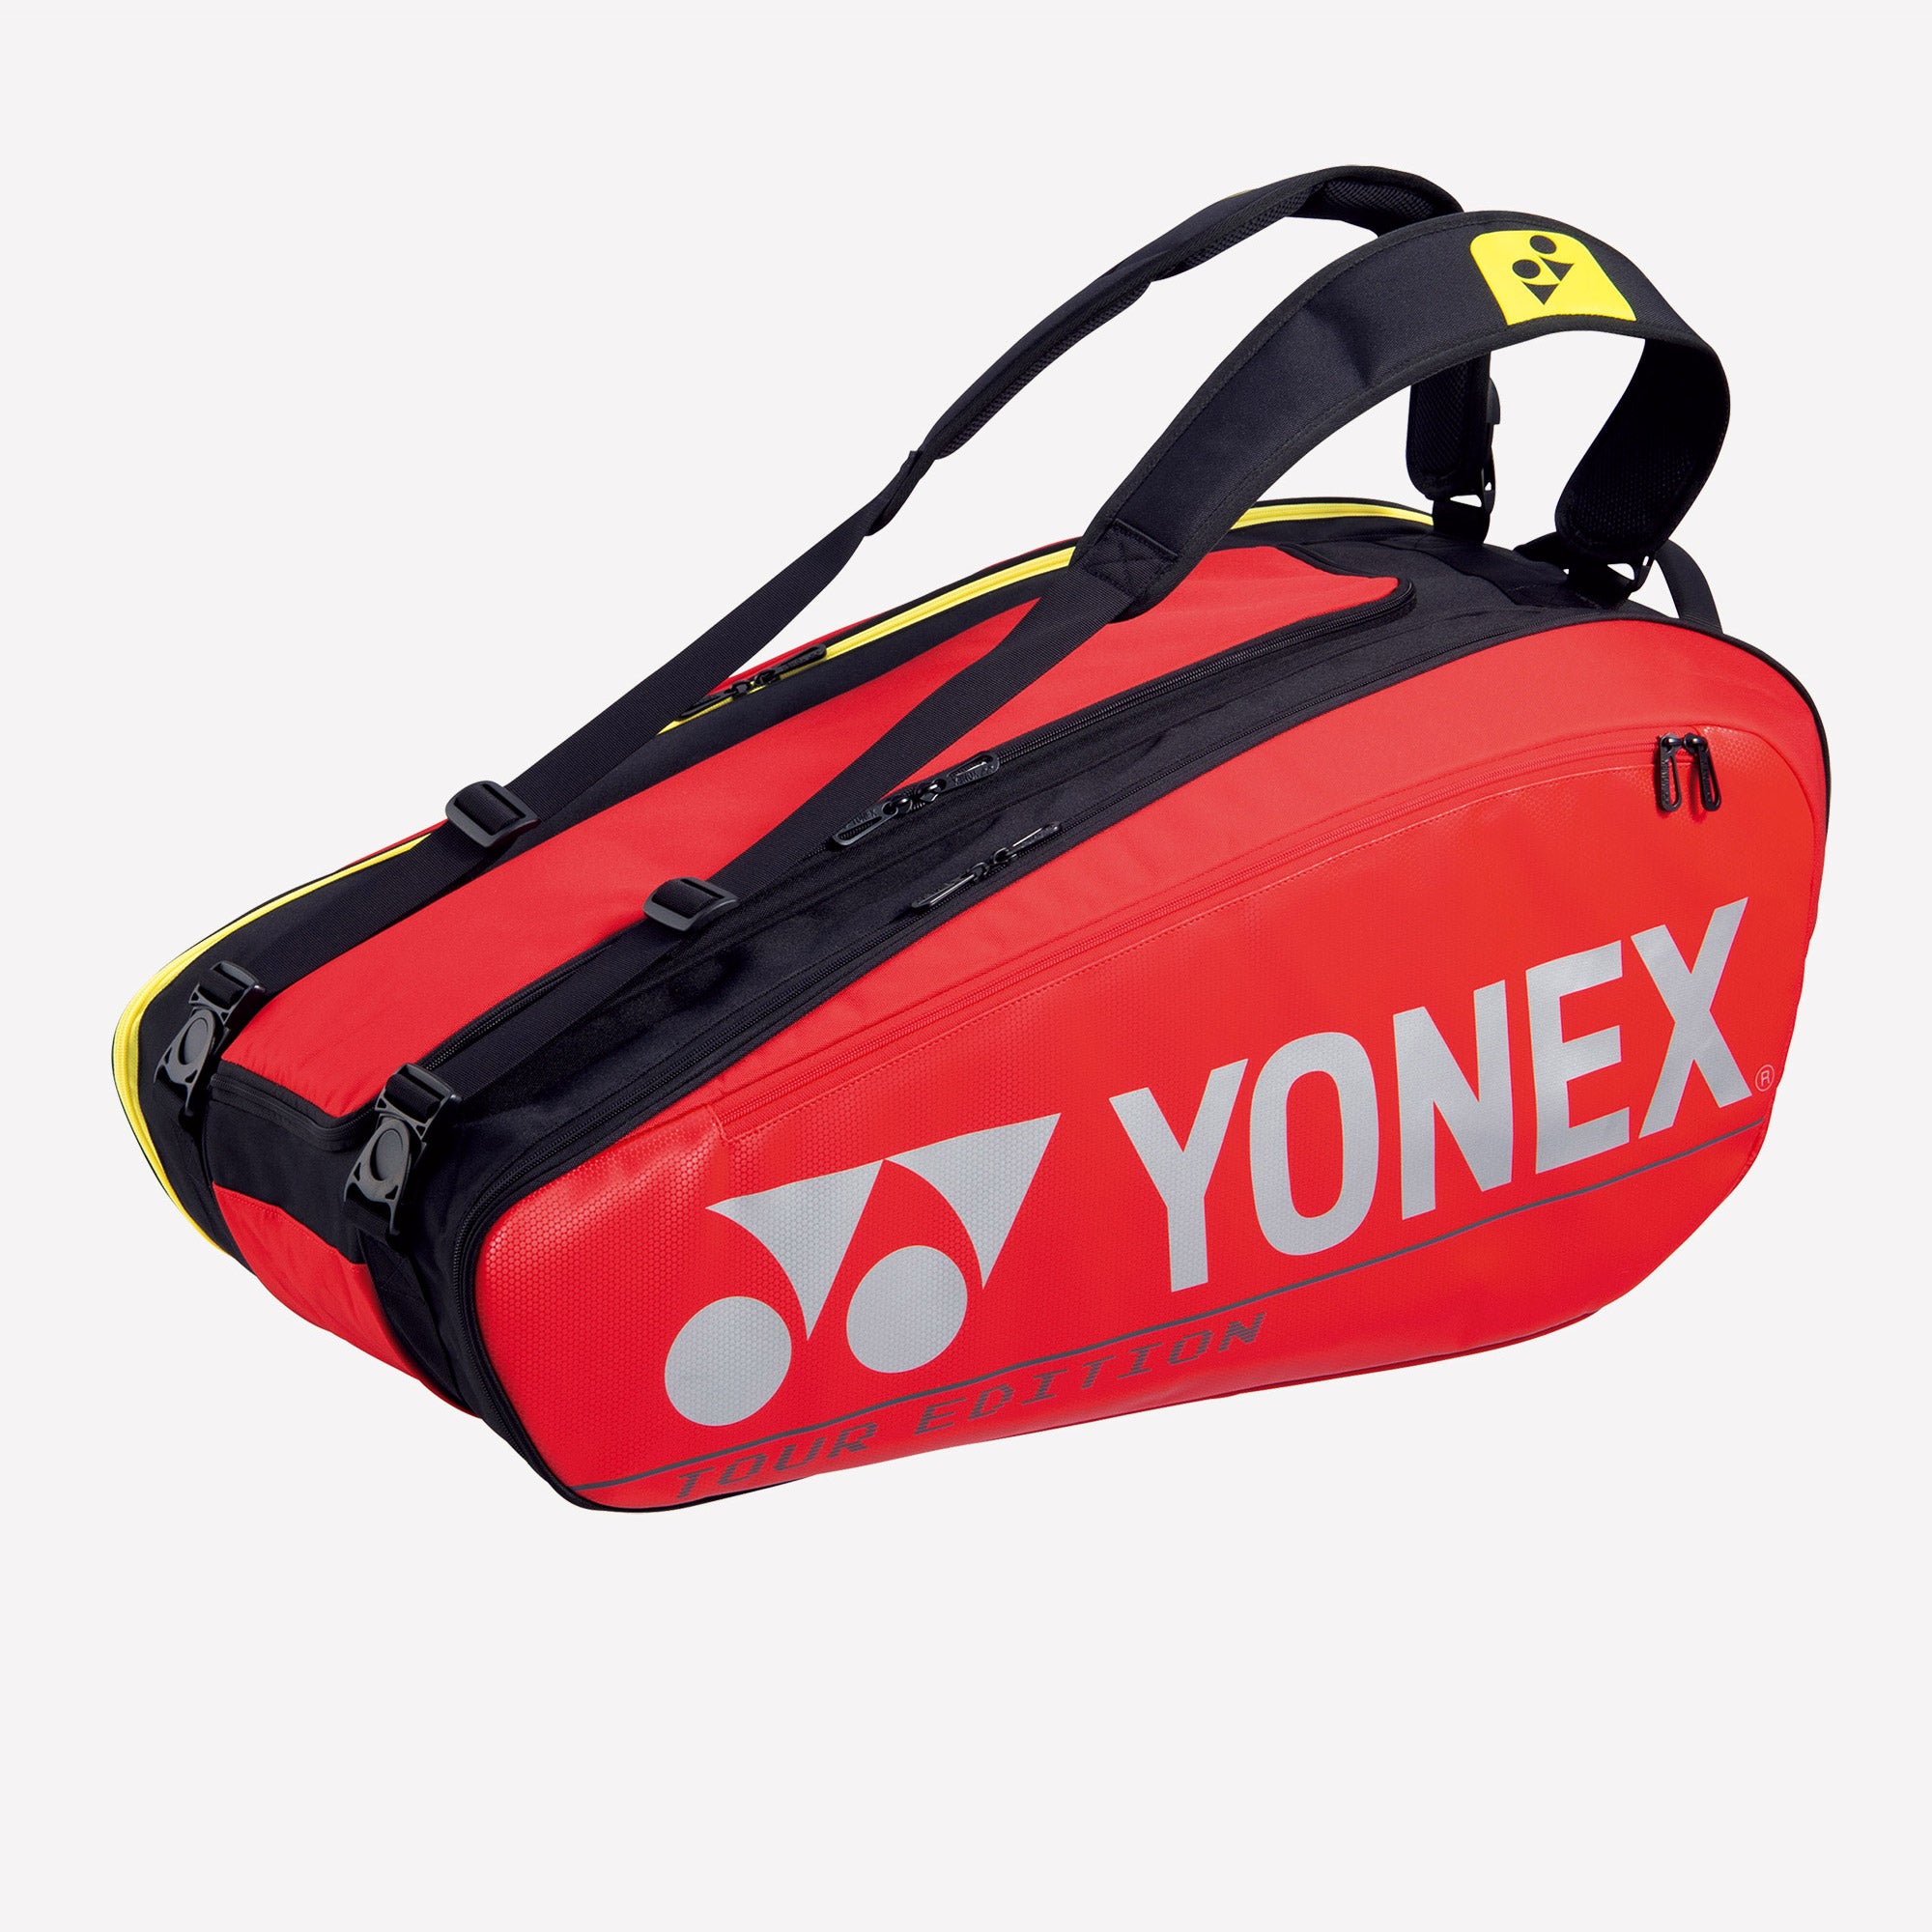 Yonex Pro Racket X9 Tennis Bag Red (1)